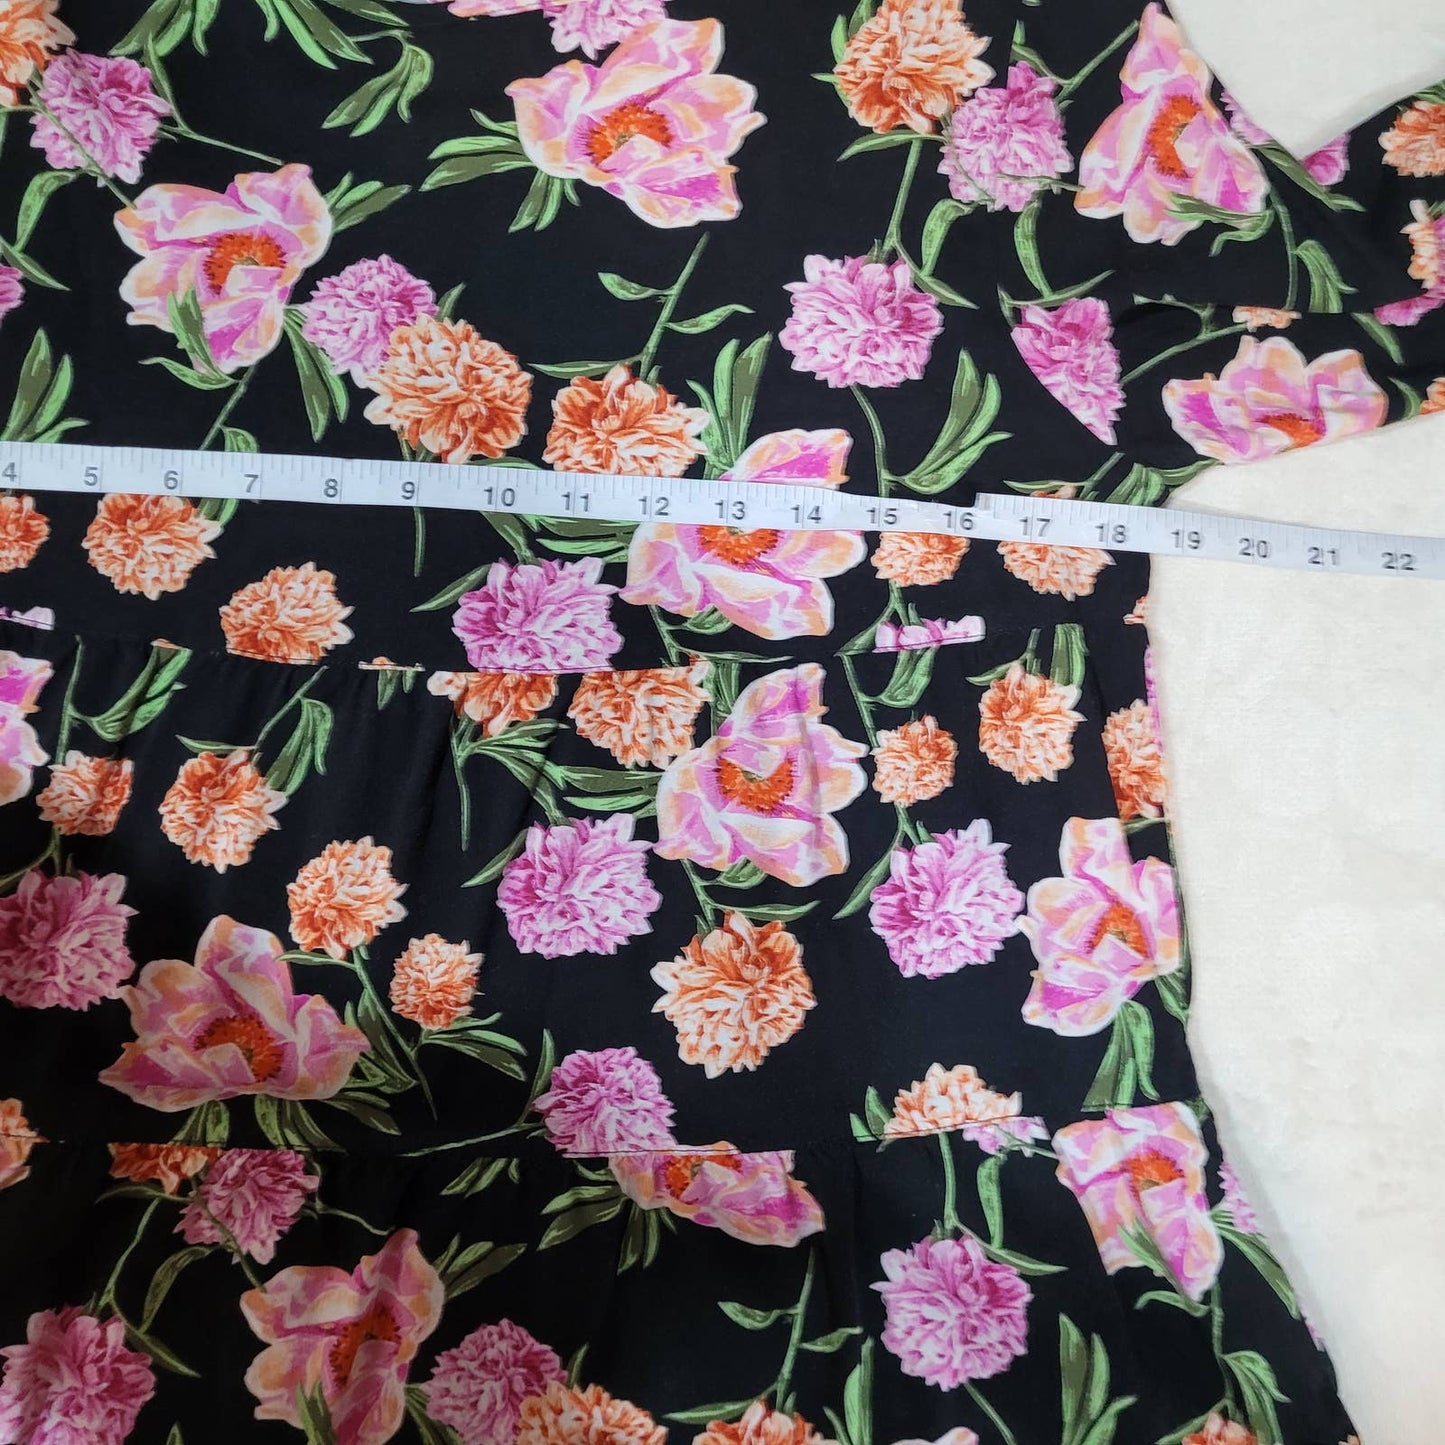 Ripzone Black Blouse with Orange and Pink Floral Pattern - Size MediumMarkita's ClosetRipzone